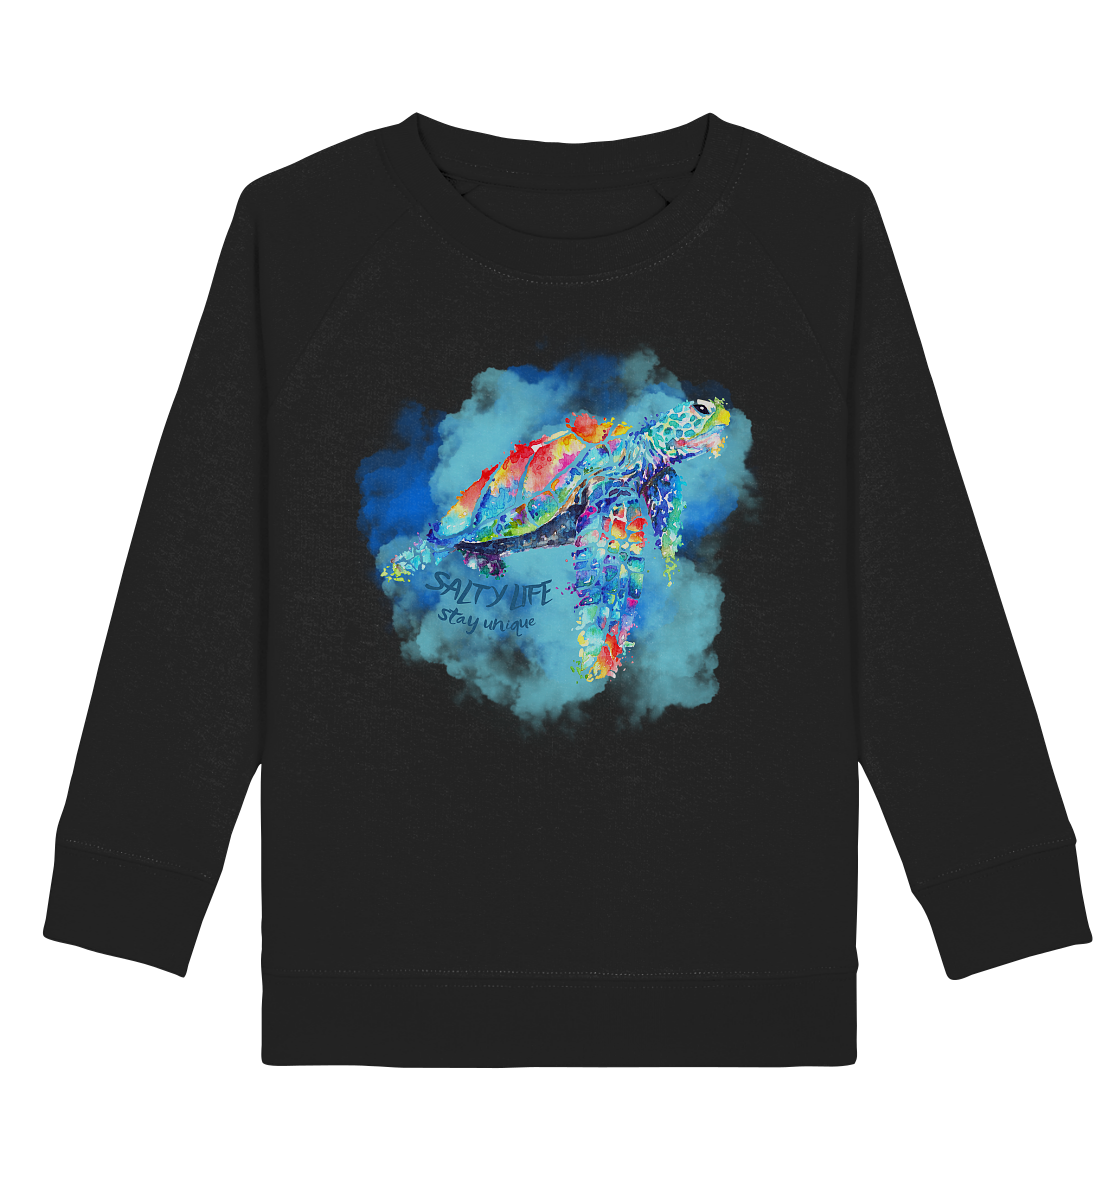 Sea Turtle "Stay unique" - Kids Organic Sweatshirt